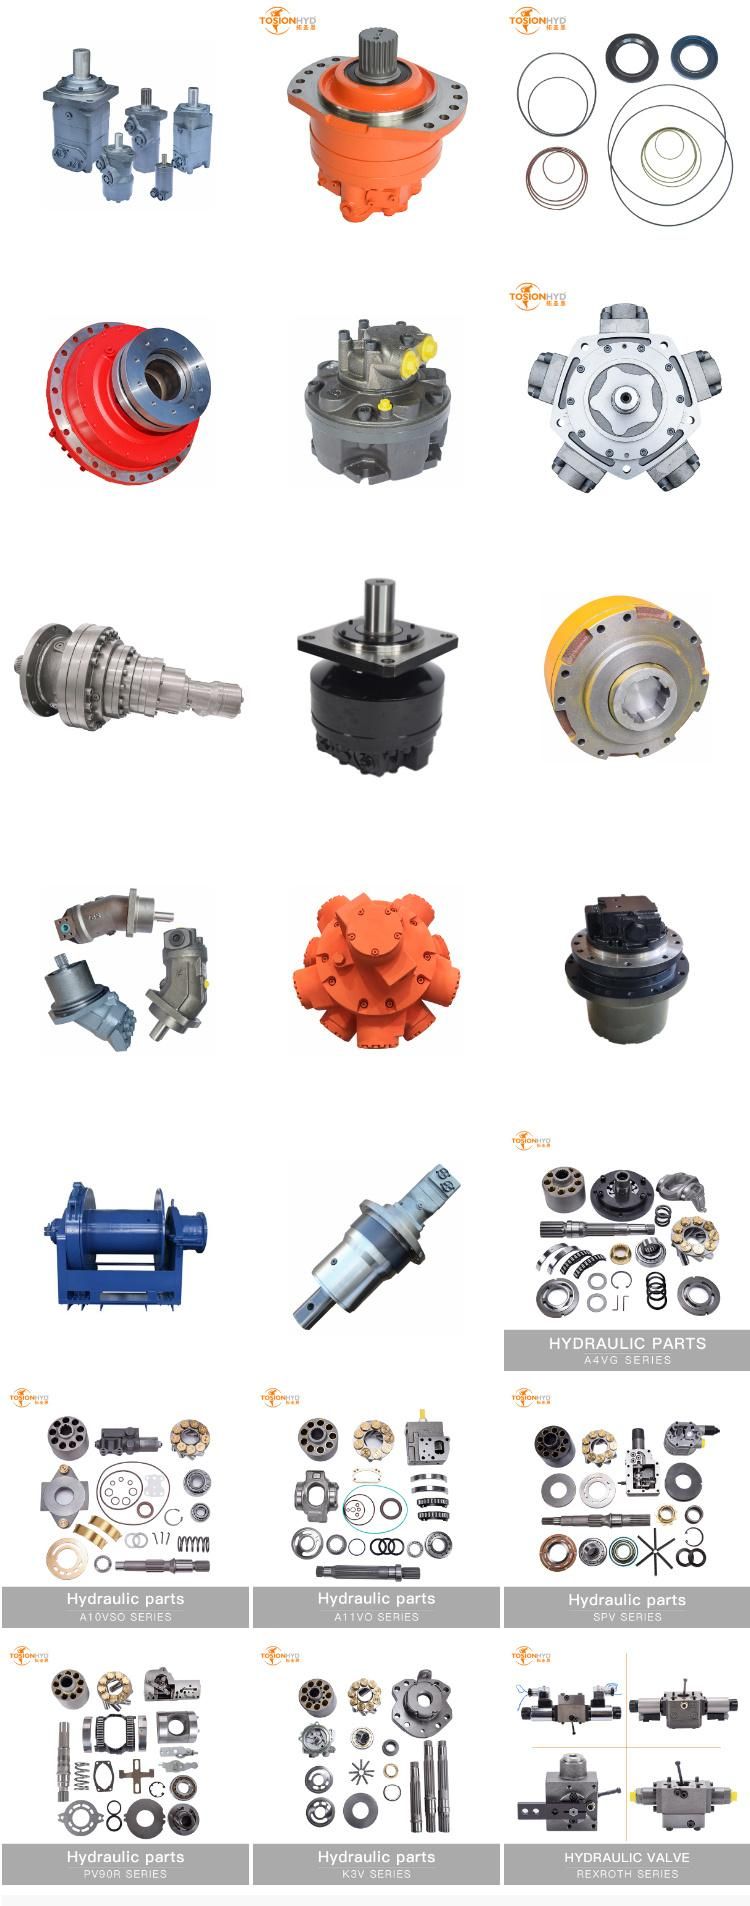 A7V 500 Hydraulic Pump Parts with Rexroth Spare Repair Kits